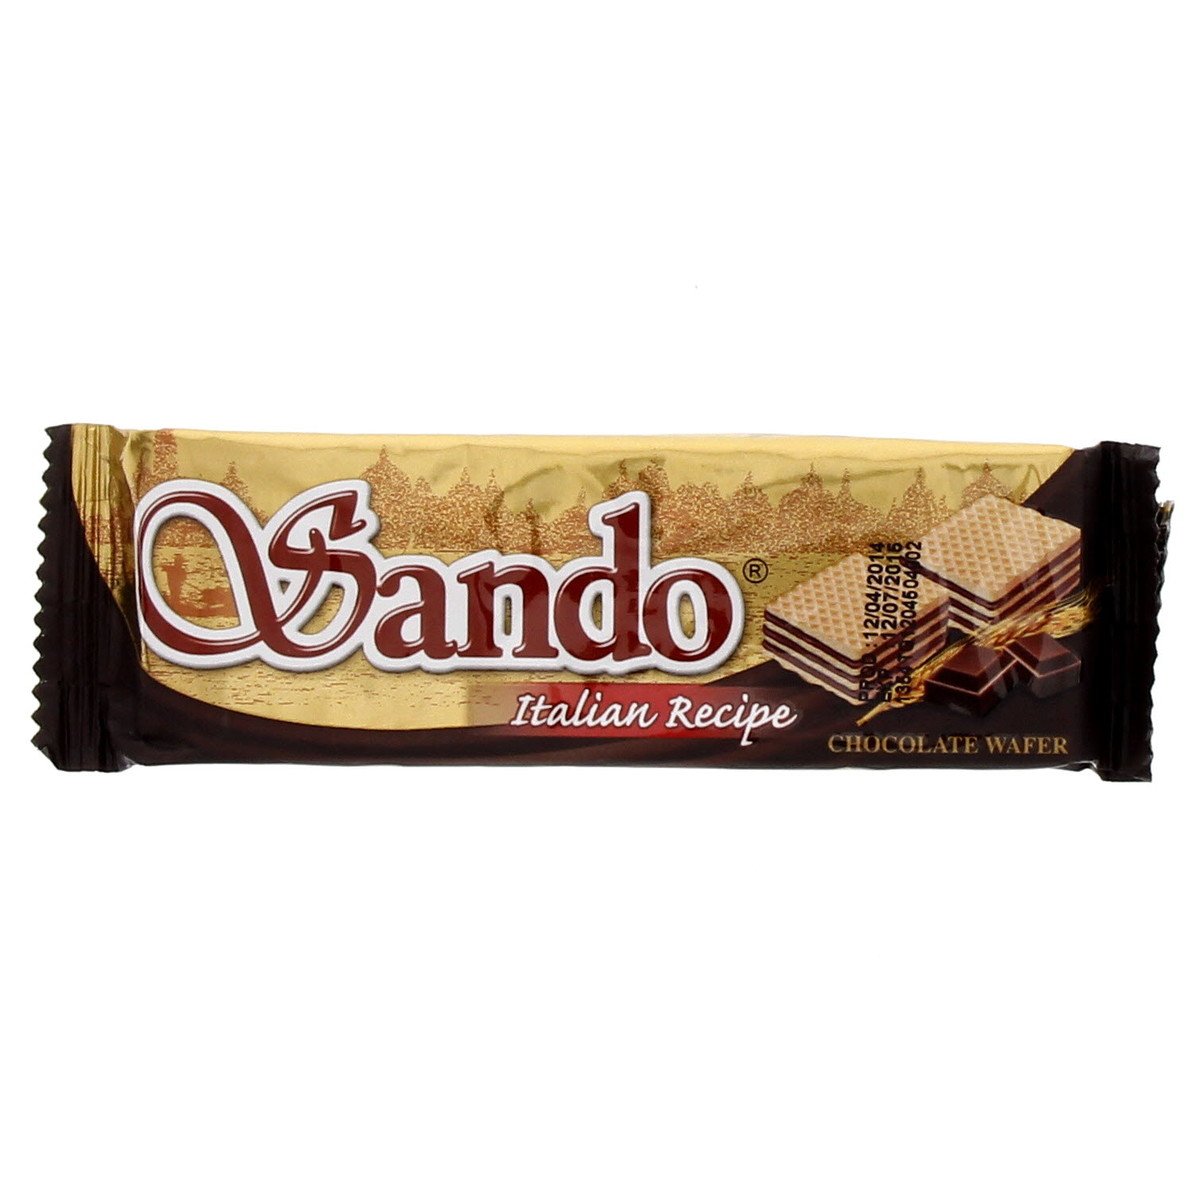 Sando Italian Reipe Chocolate Wafer 32g x 24 Pieces